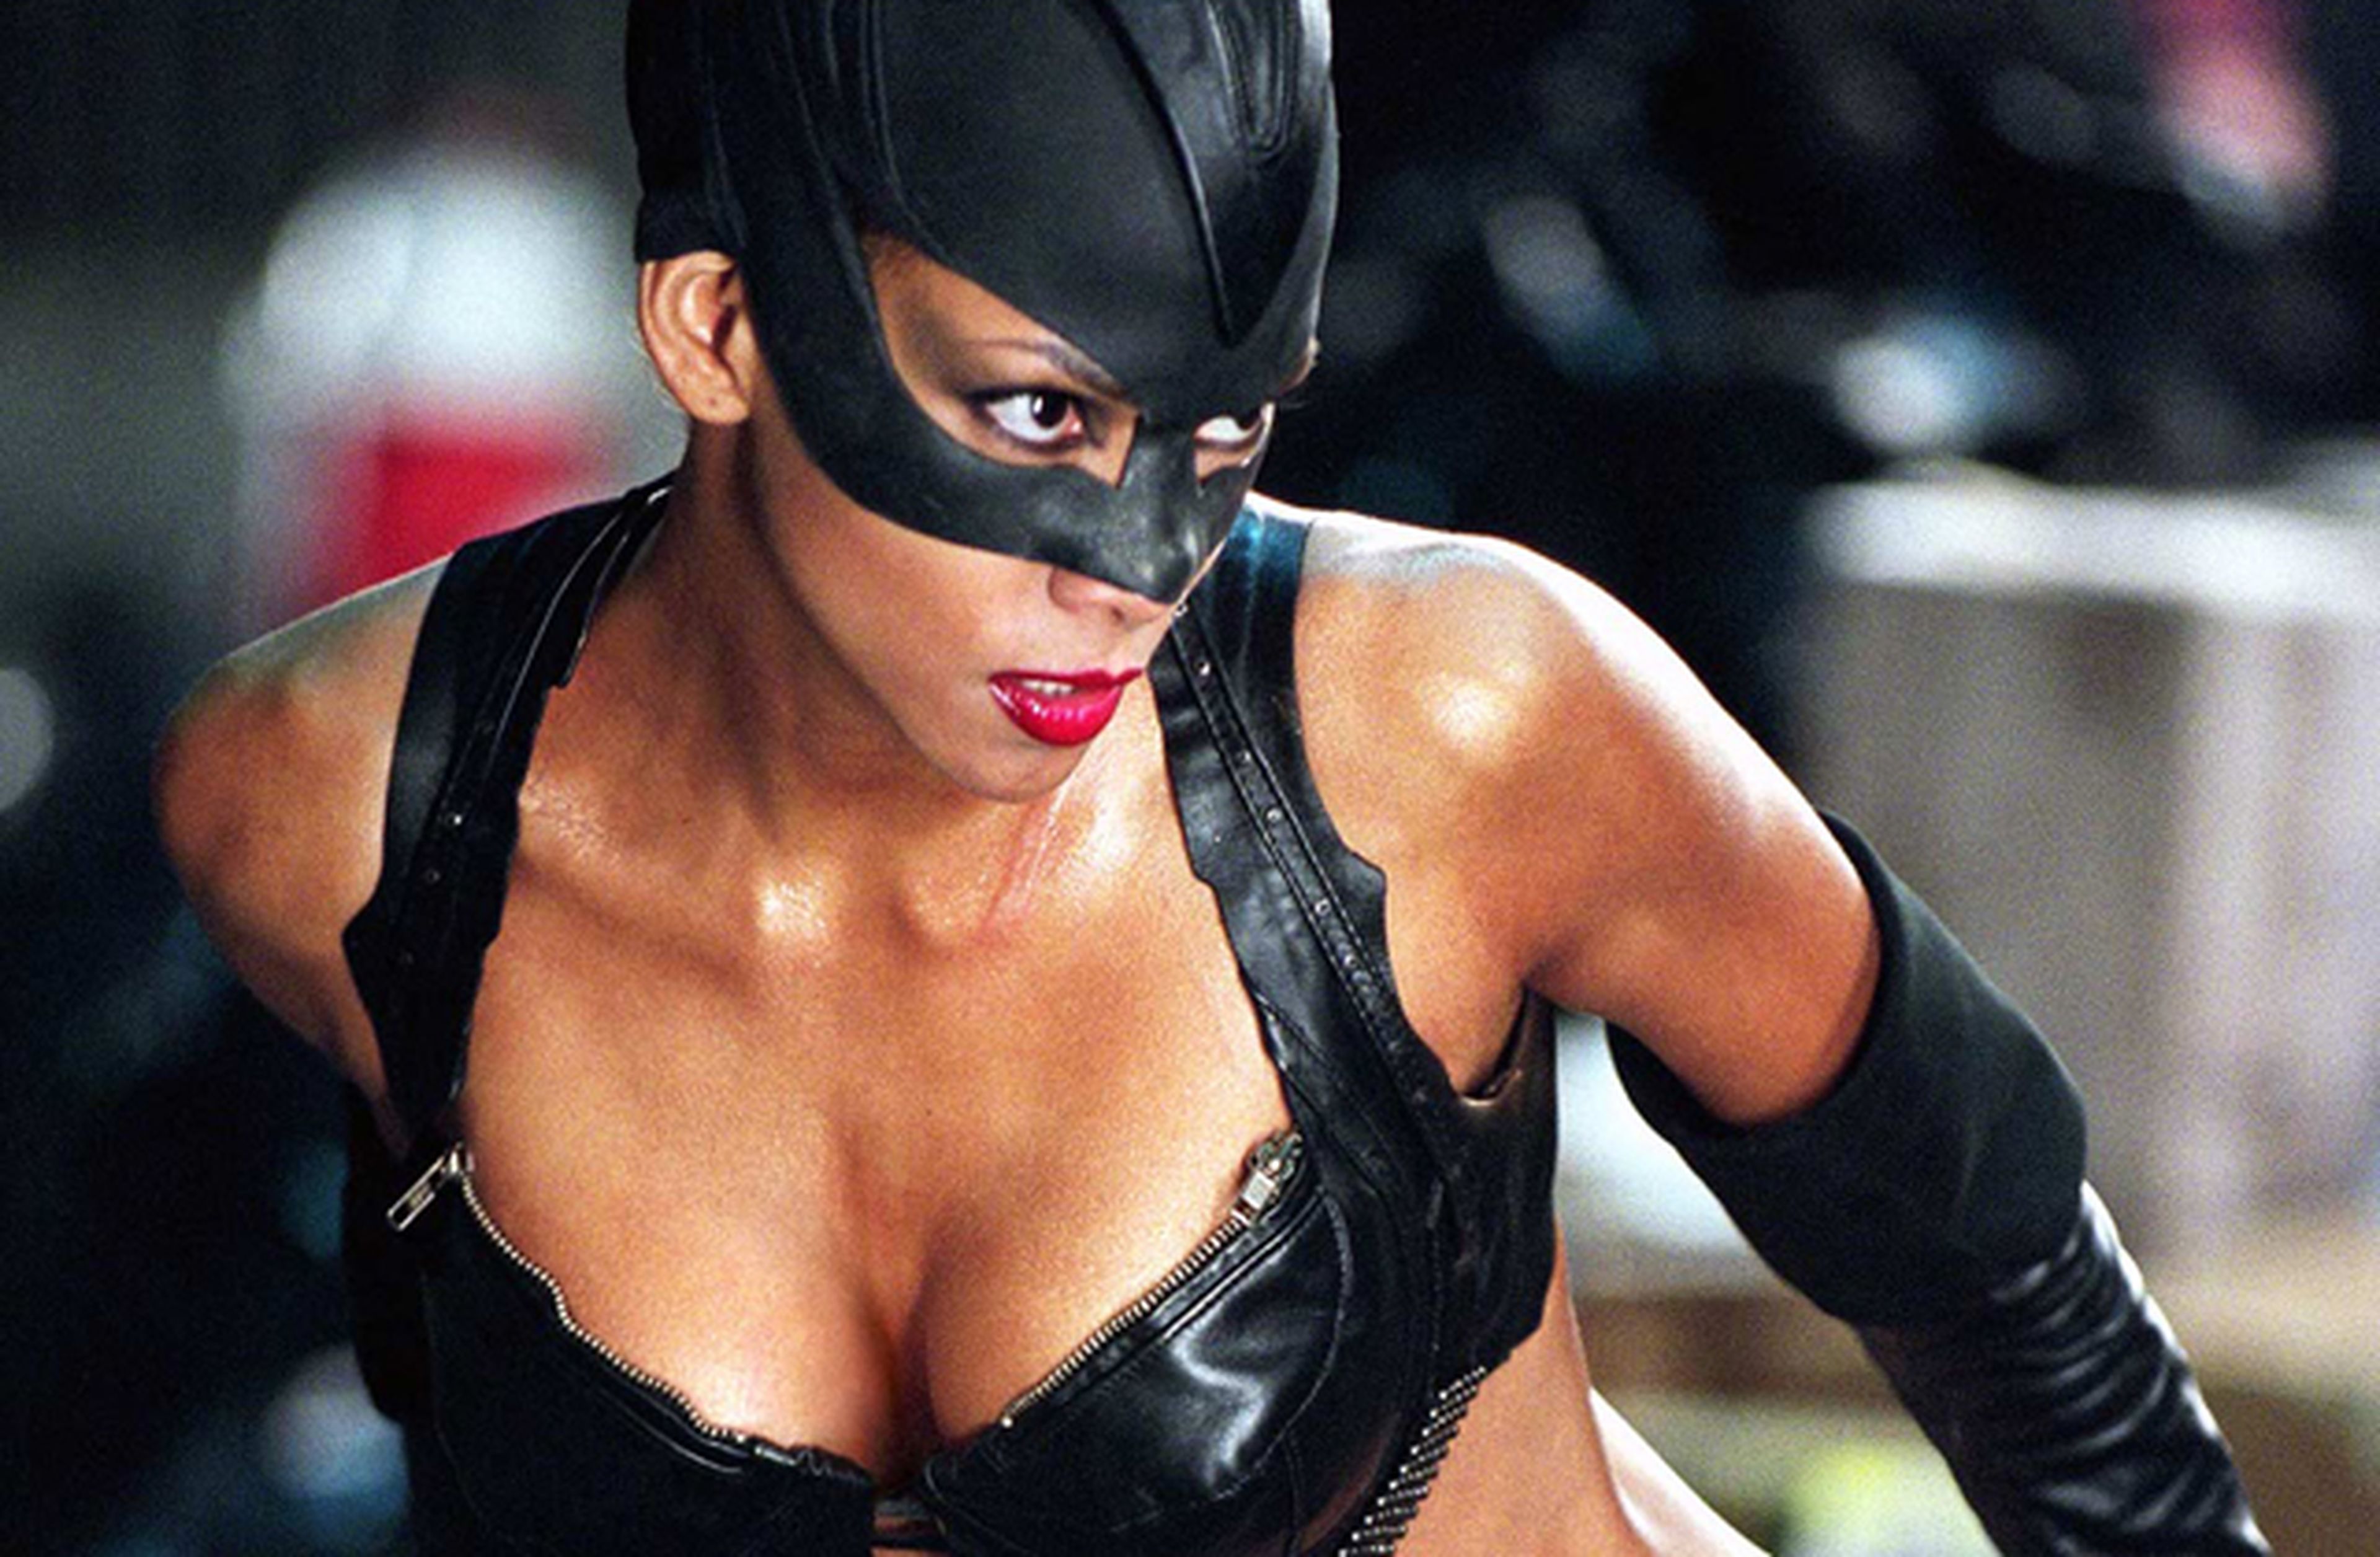 Cine de superhéroes: crítica de Catwoman